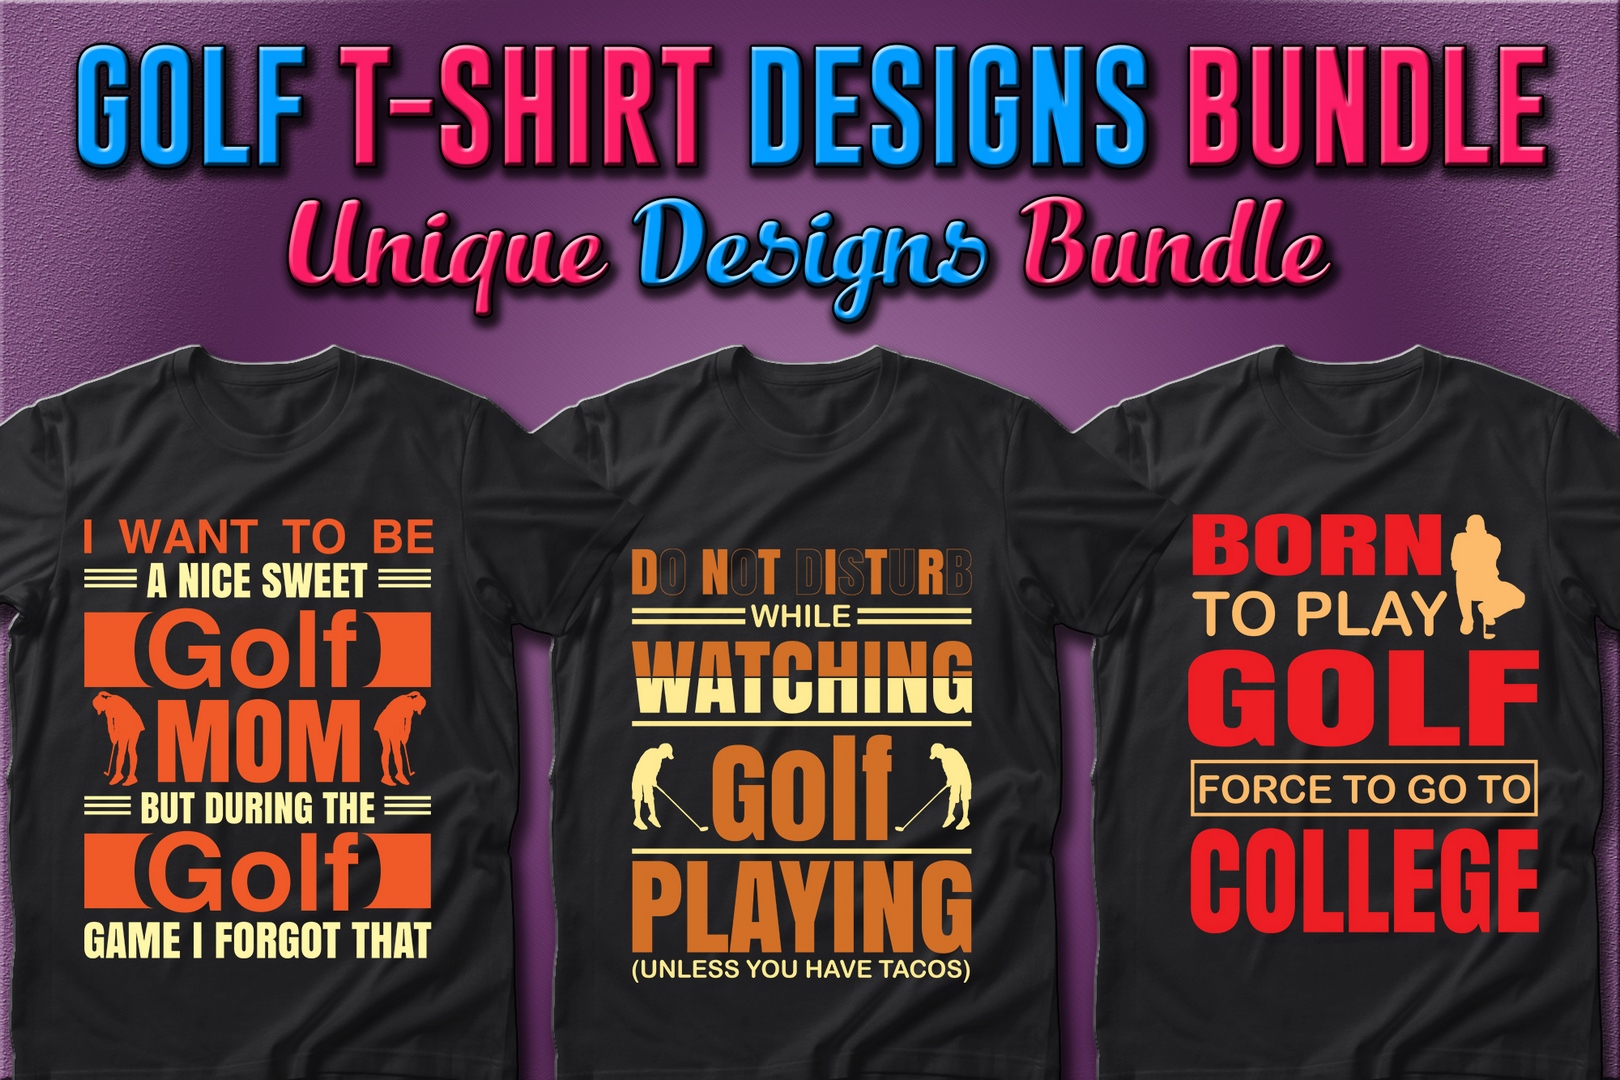 40-golf-t-shirt-designs-bundle